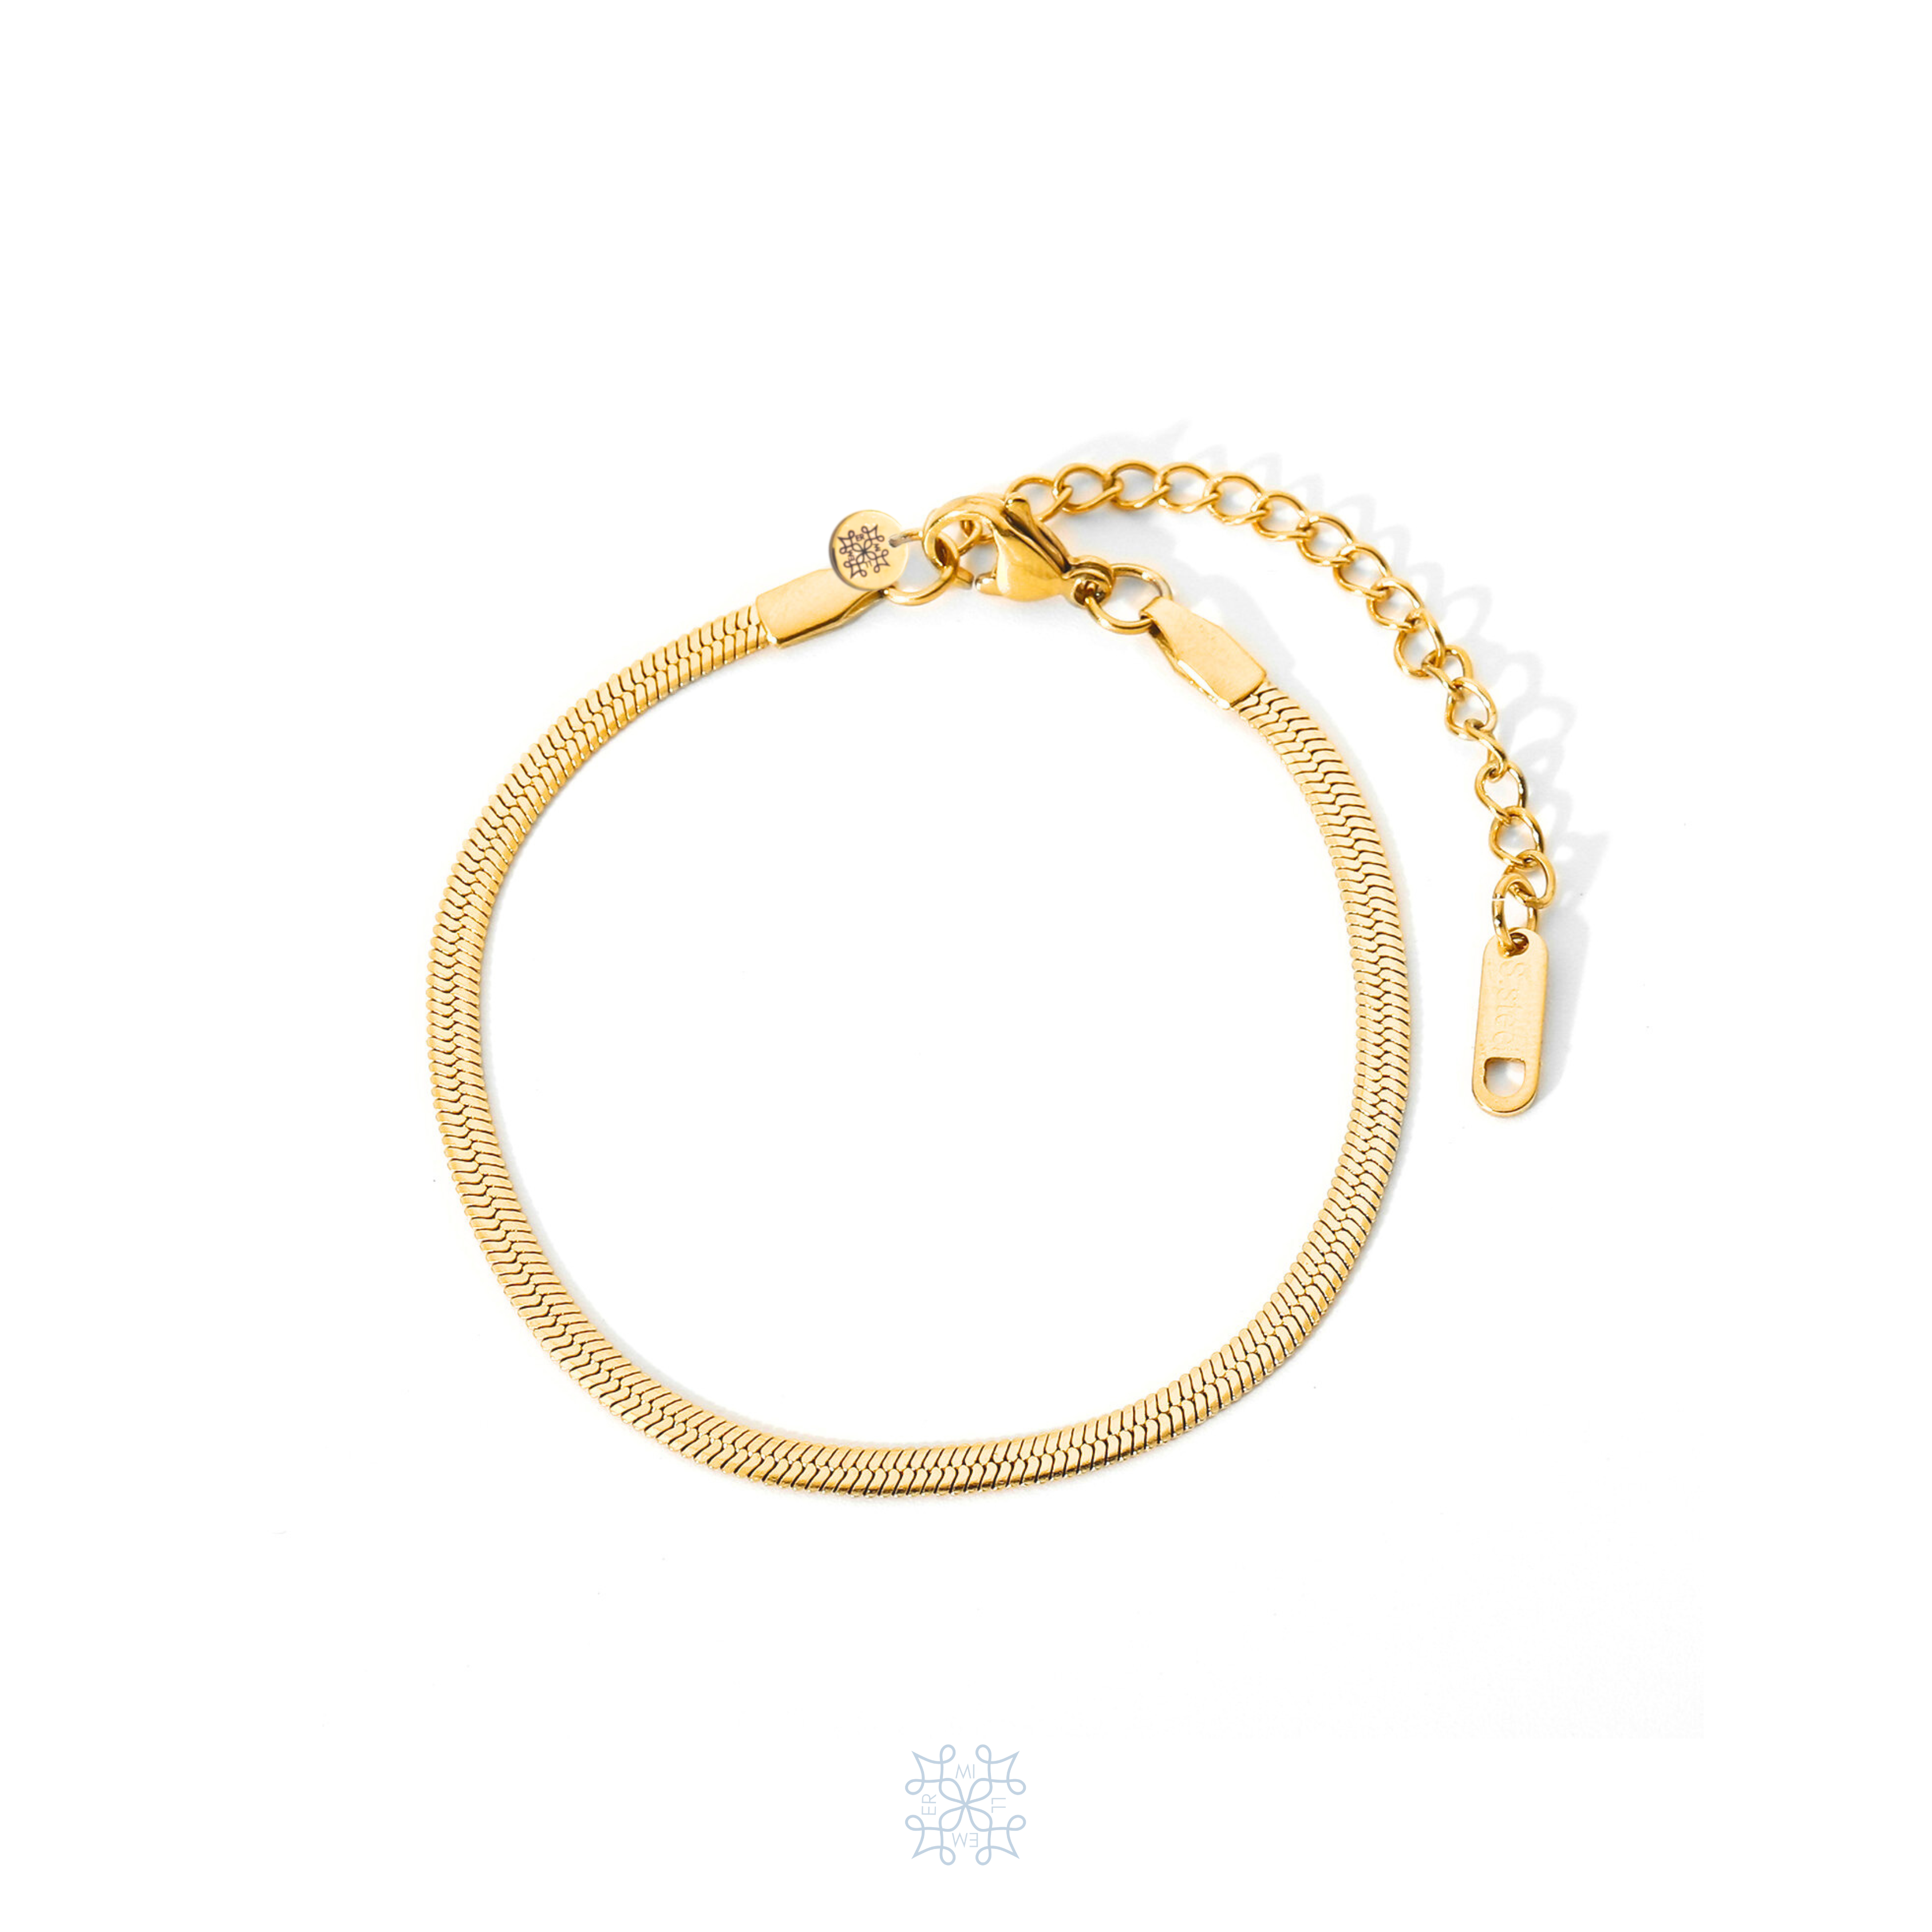 Herringbone texture Gold bracelet. 